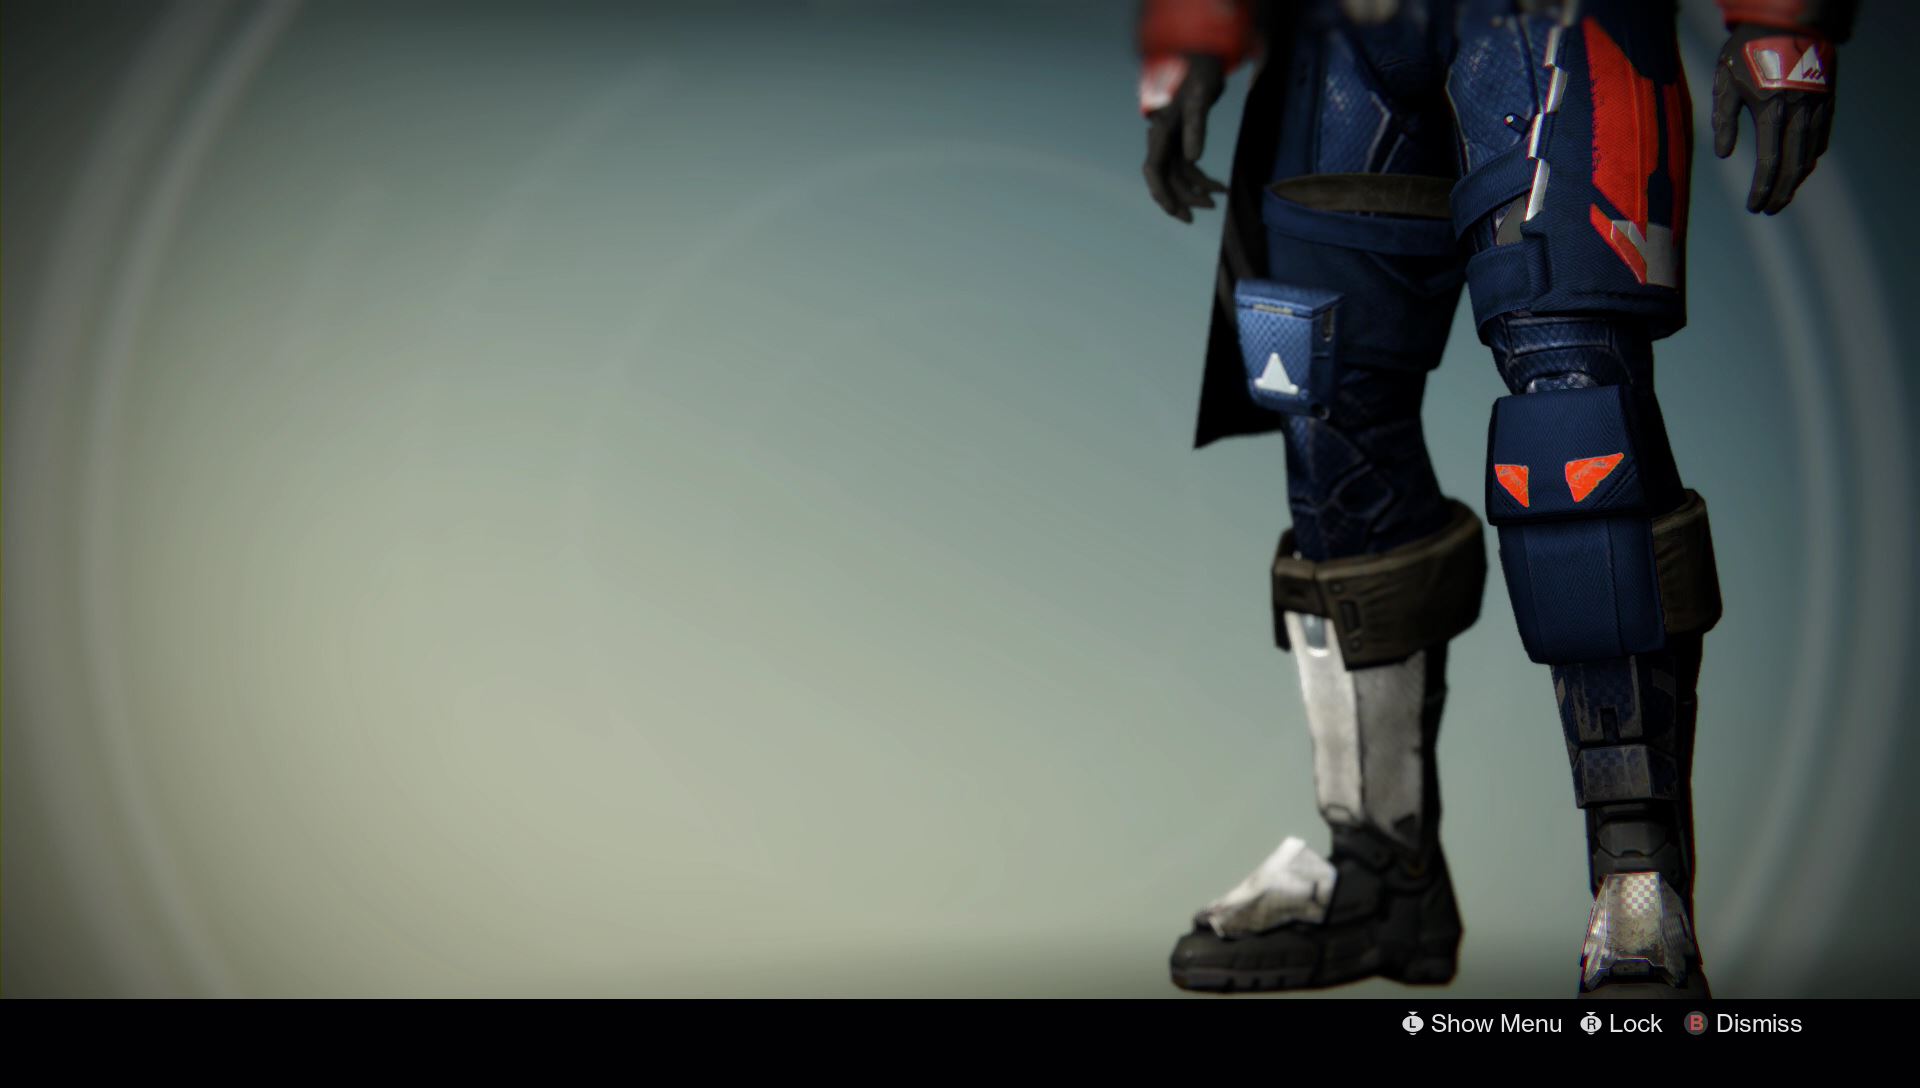 destiny titan armor customization